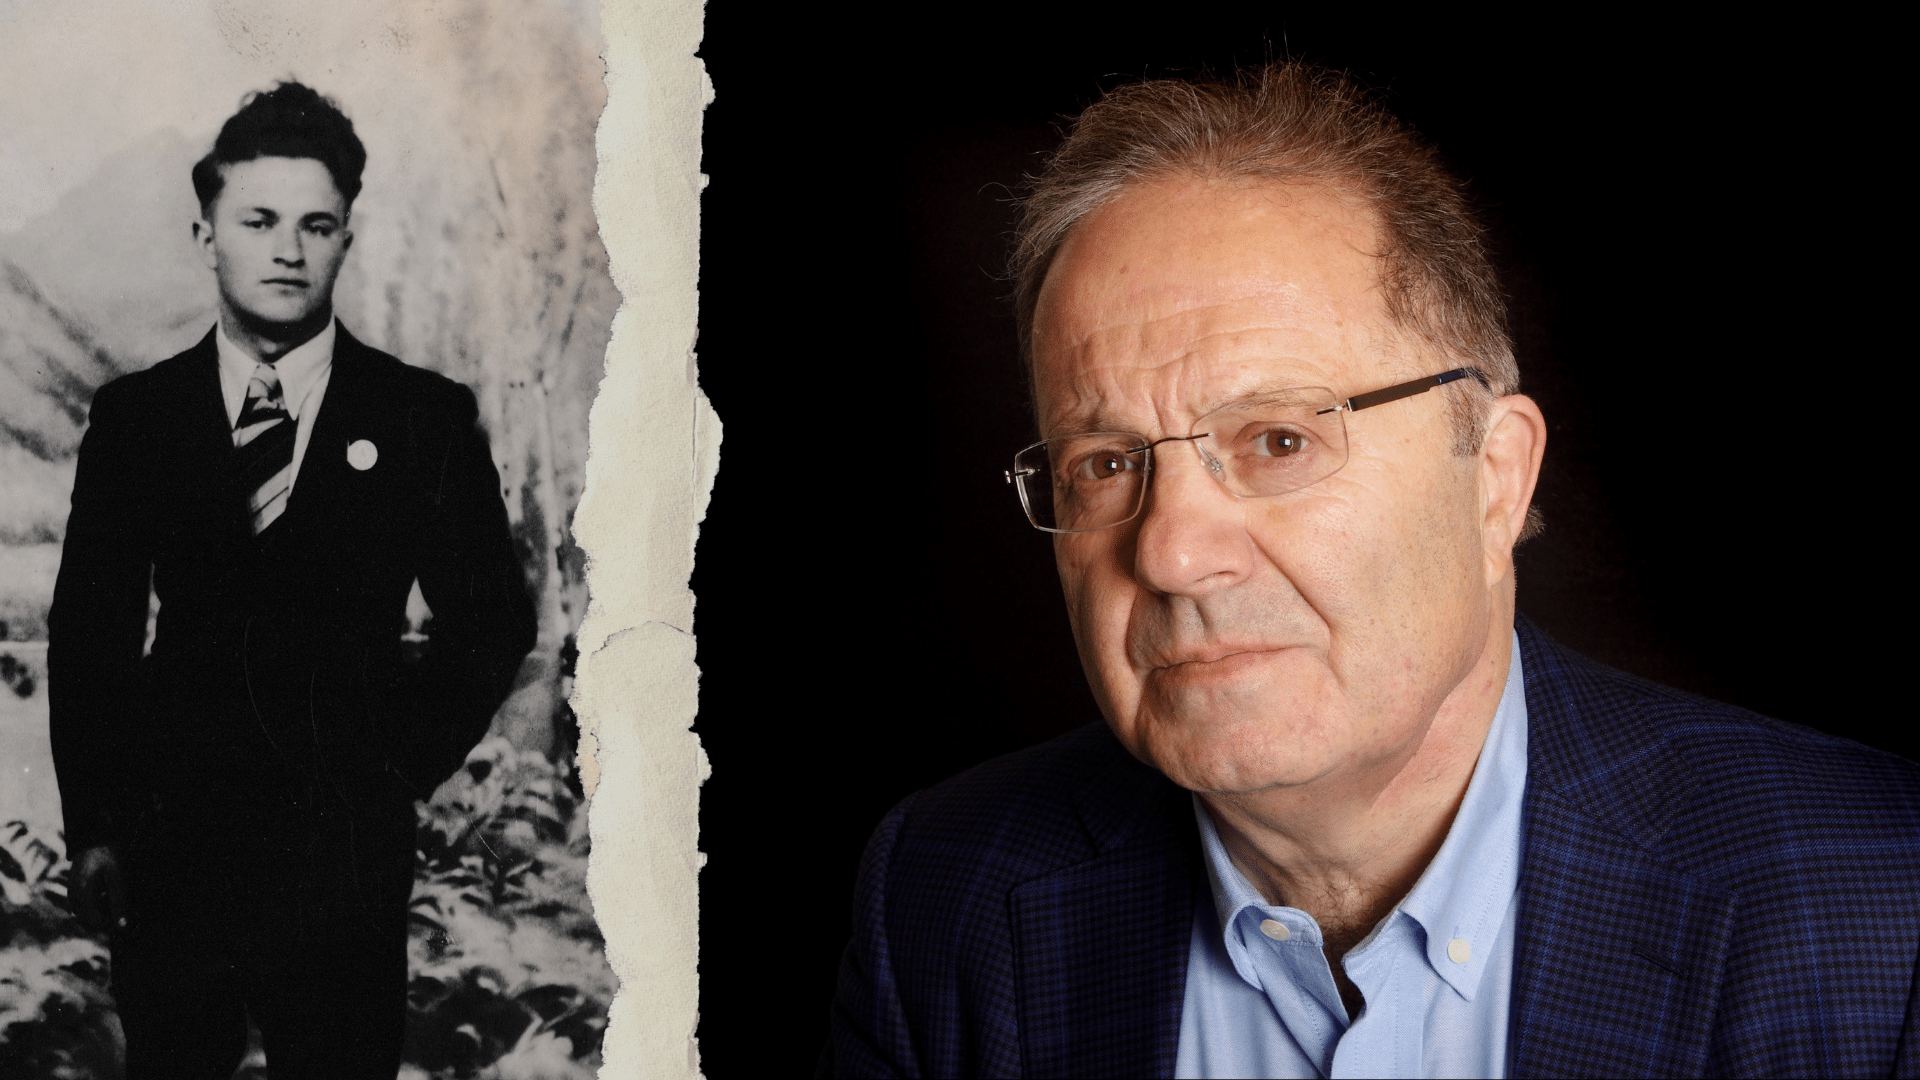 John Carr: Min far dræbte en nazist som 13-årig, flygtede og skjulte sin jødiske identitet – selv for os